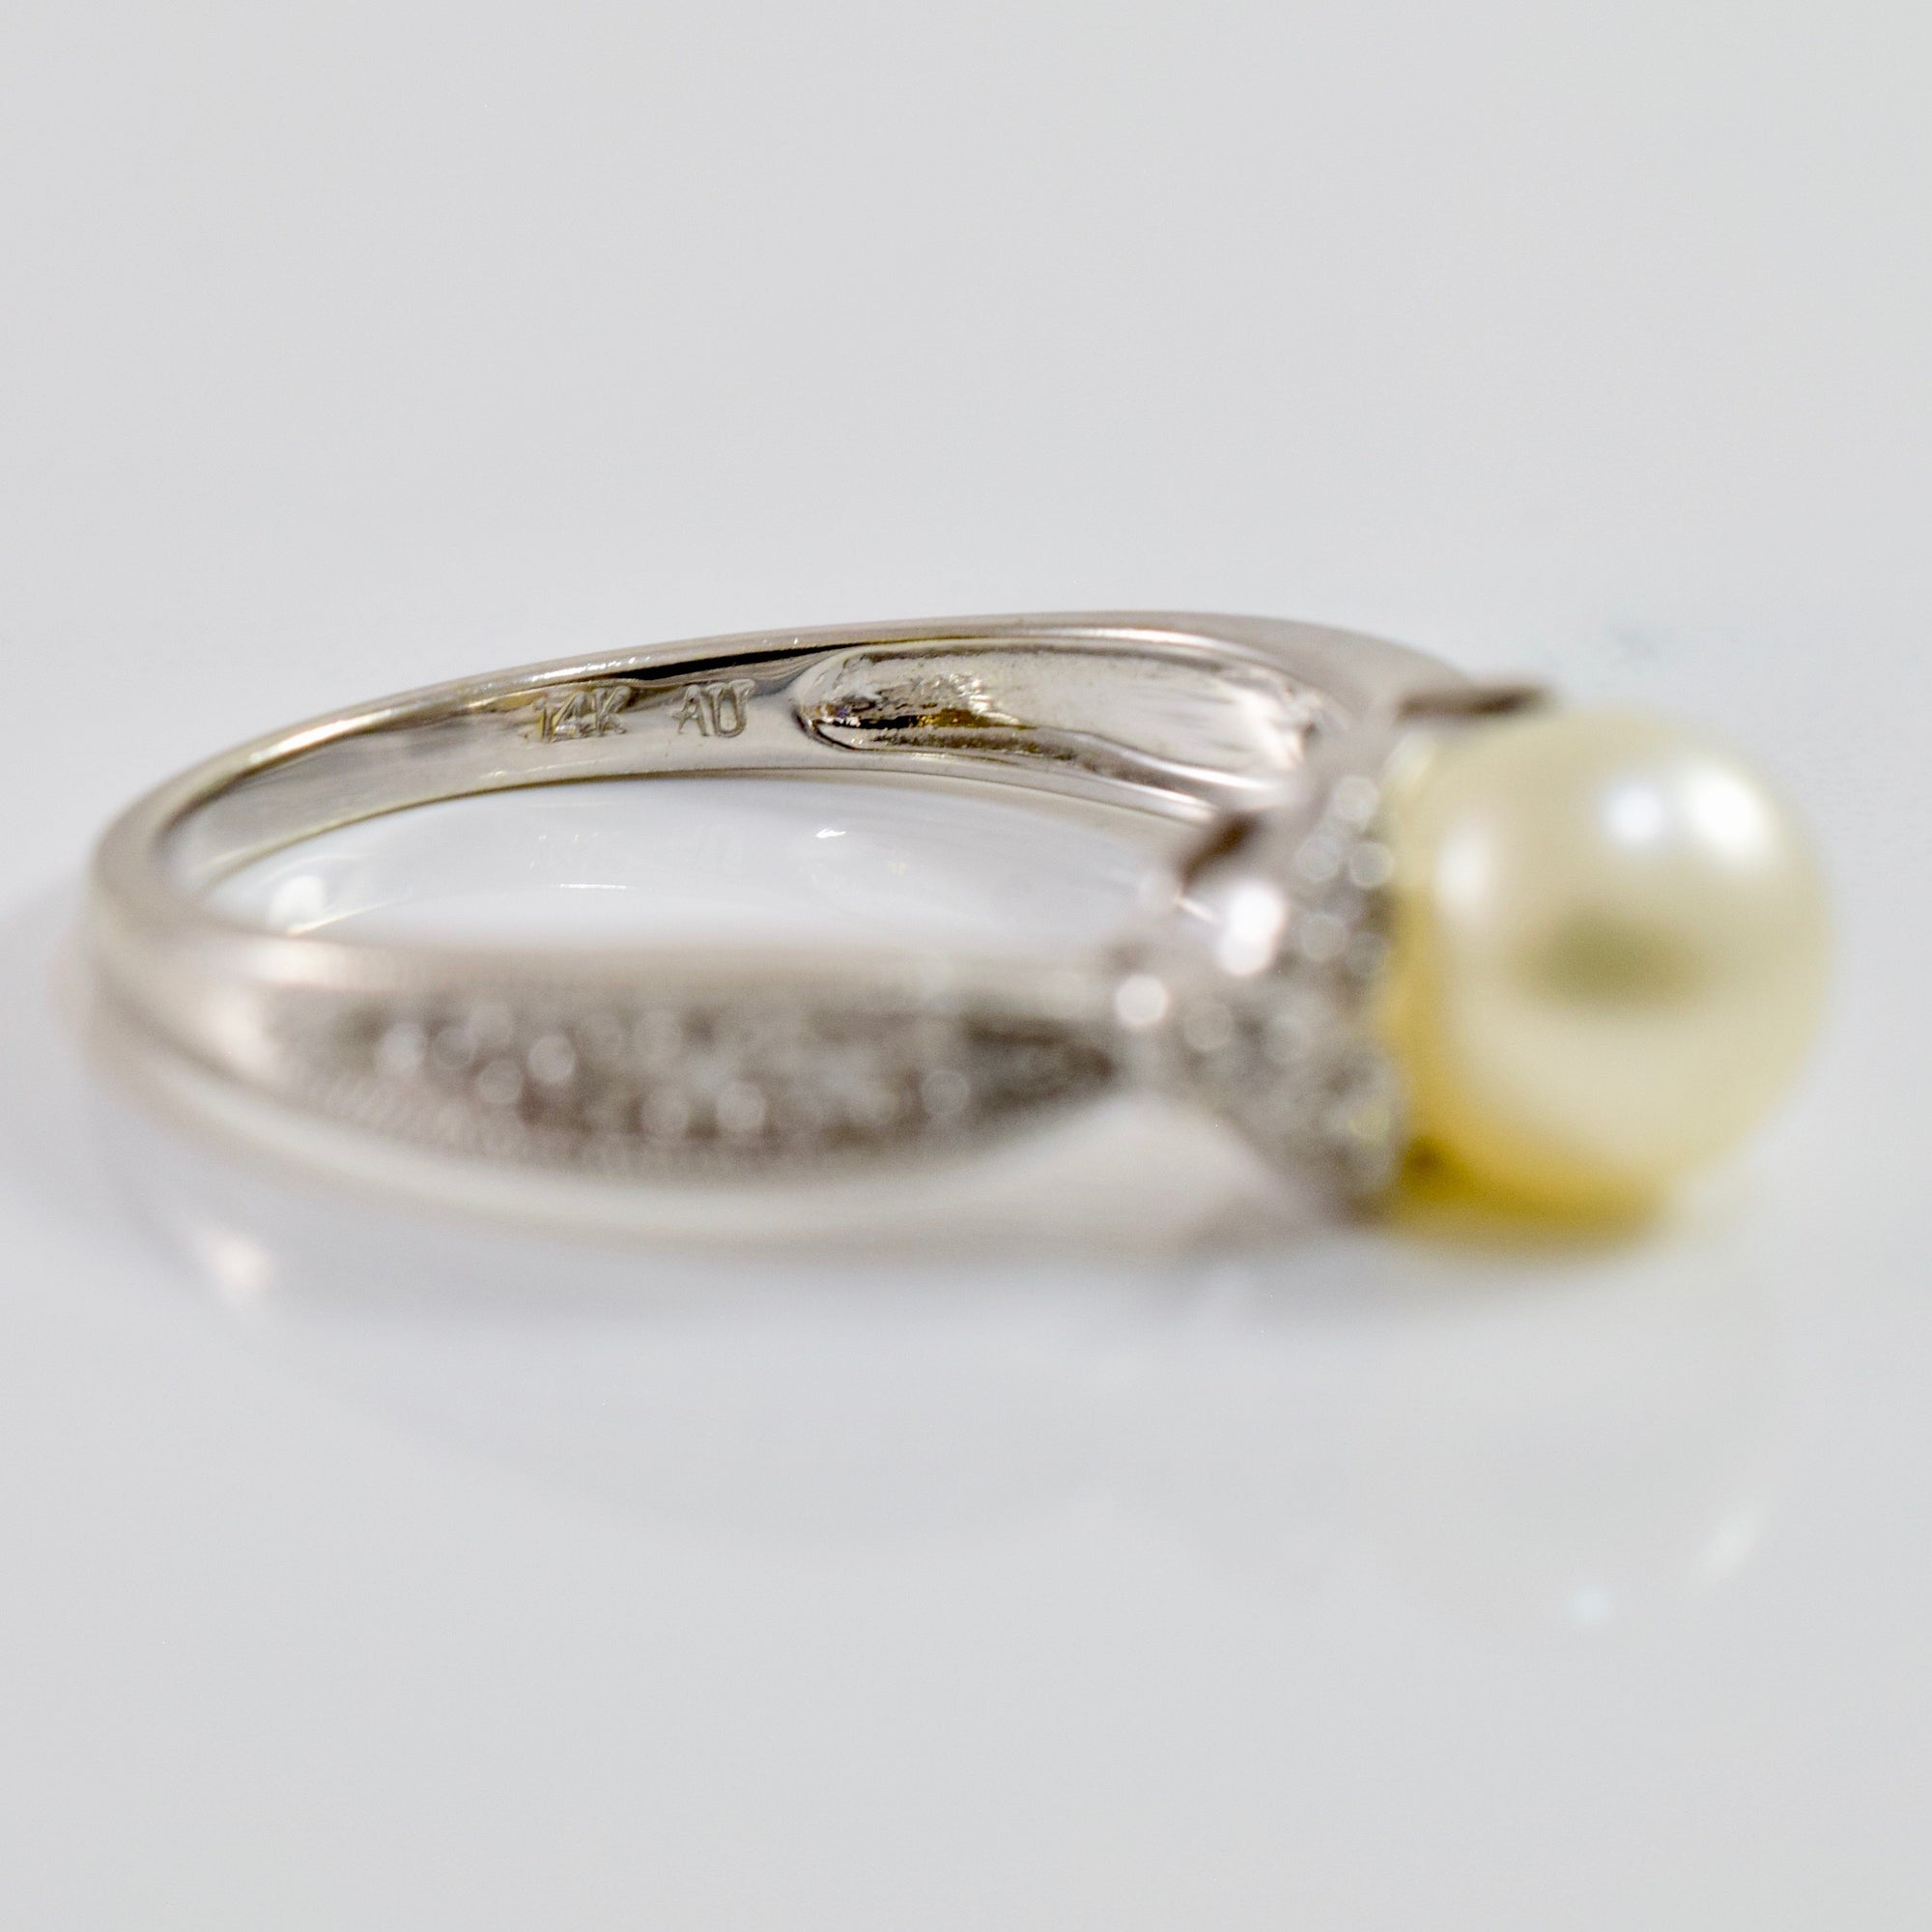 Elegant Pearl and Diamond Ring | 0.03 ctw SZ 7.25 |